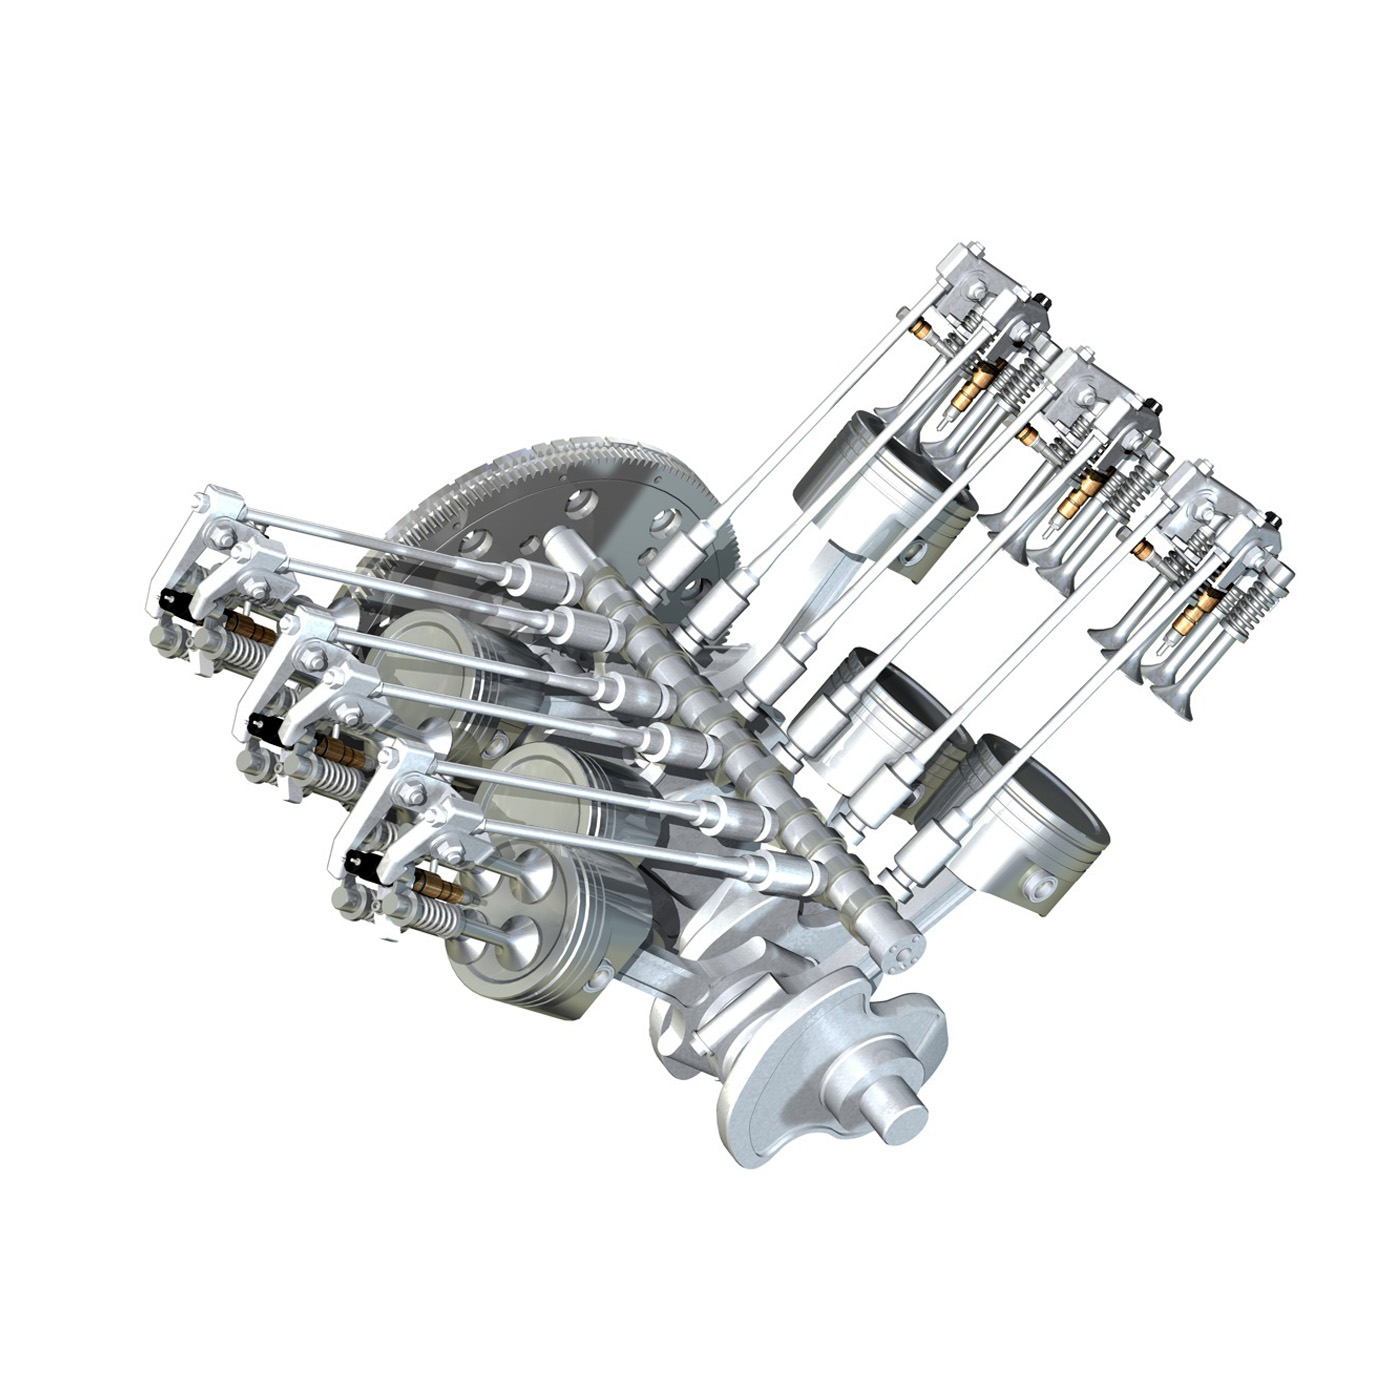 Diesel Turbo - 6-cylinder Engine 3D Model - FlatPyramid